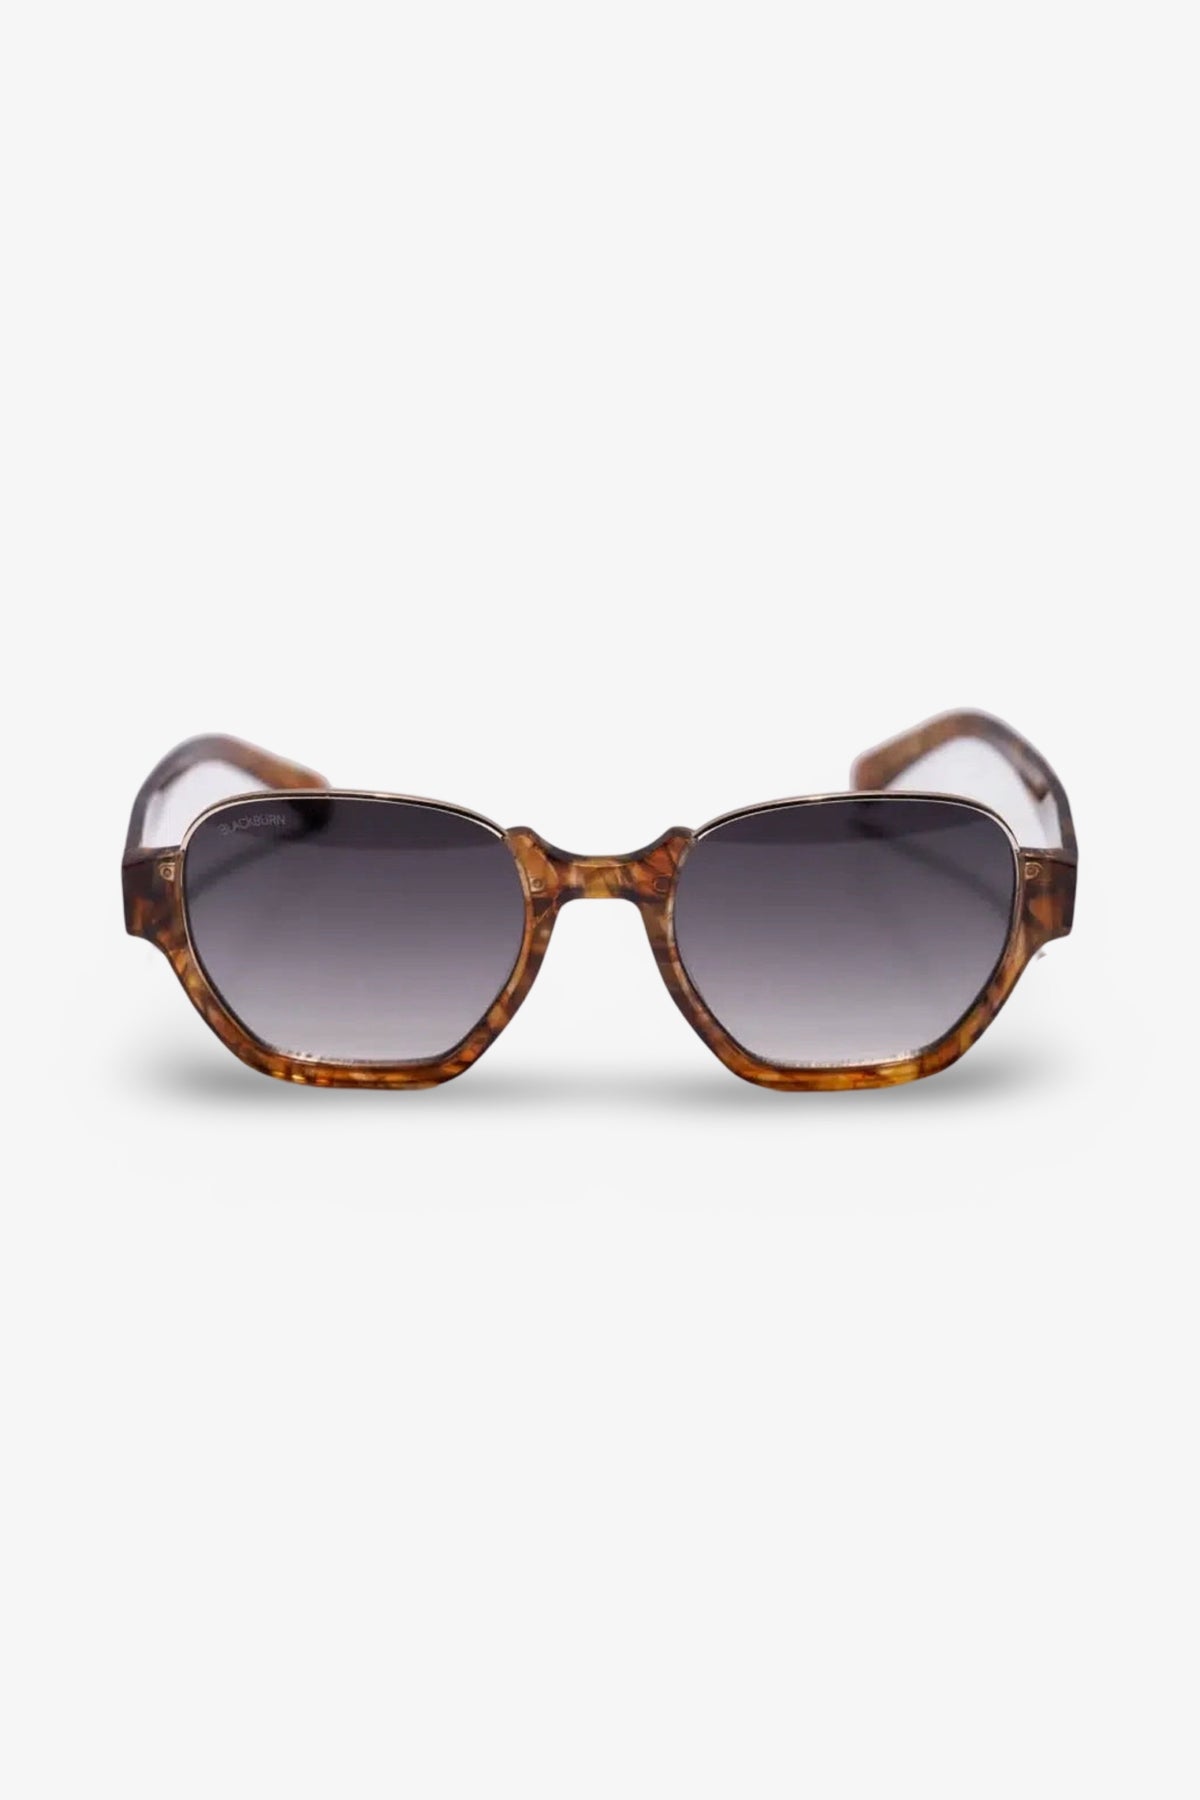 Harper Sunglasses | Beehave